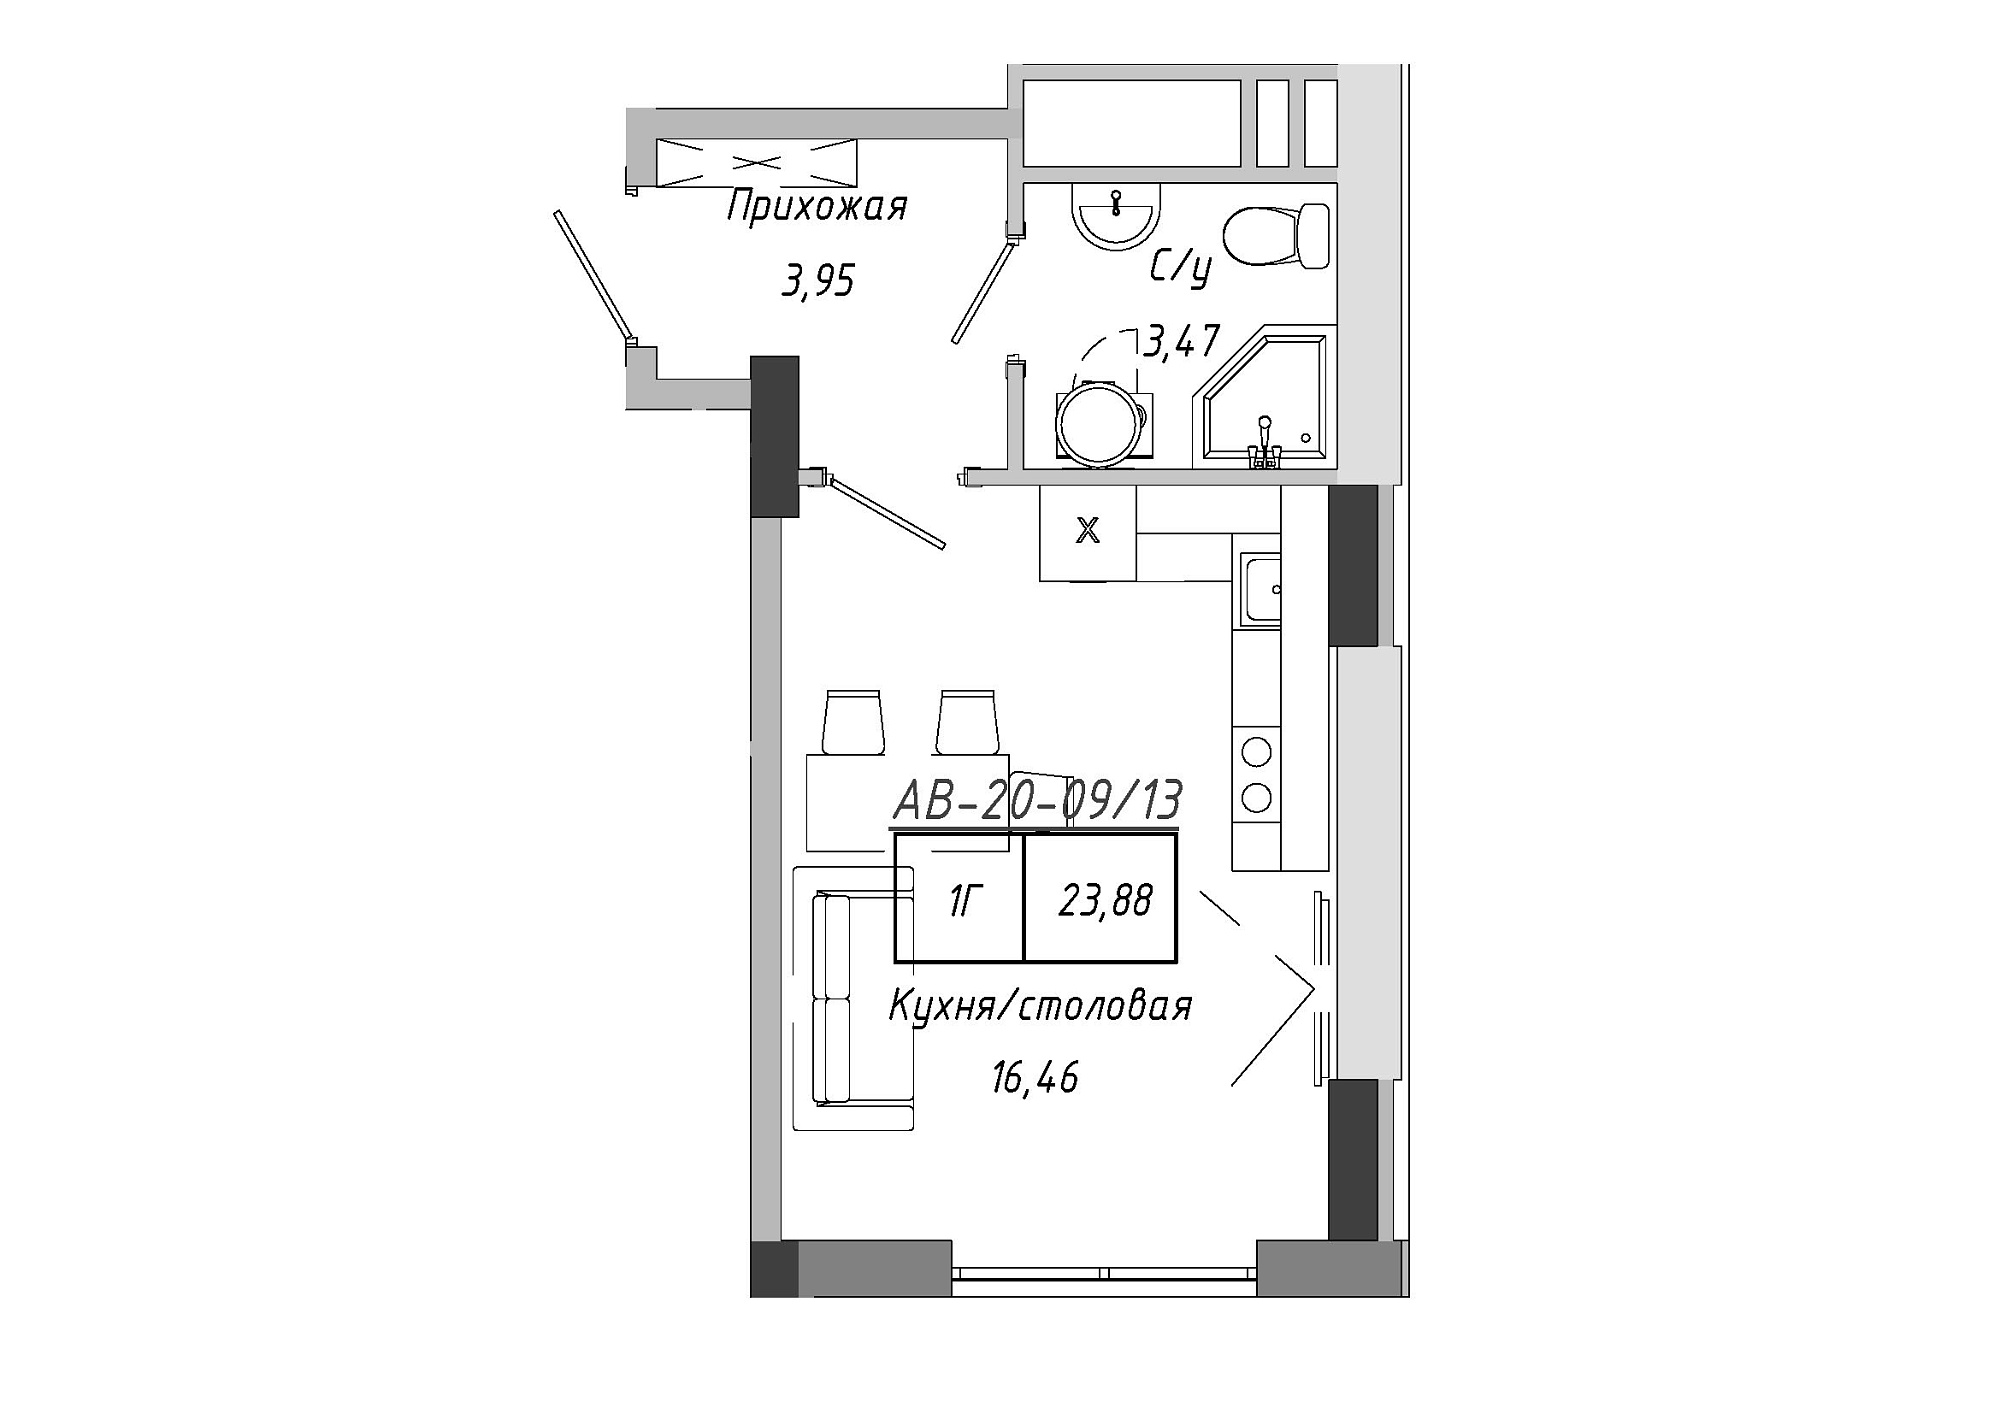 Planning Smart flats area 23.4m2, AB-20-09/00013.